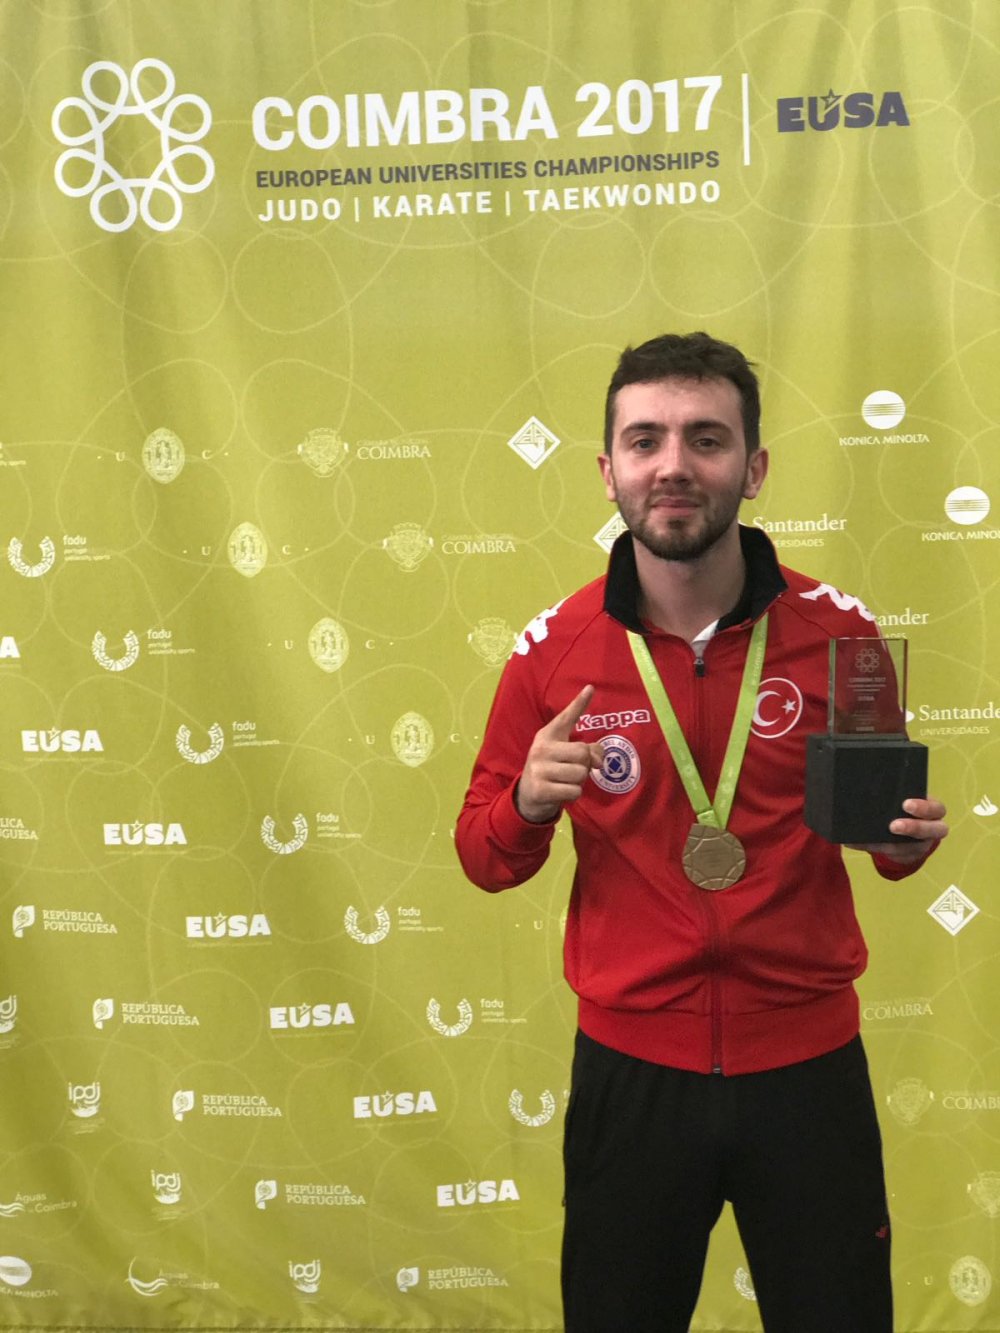 Trabzonlu karateci Avrupa Şampiyonu oldu!